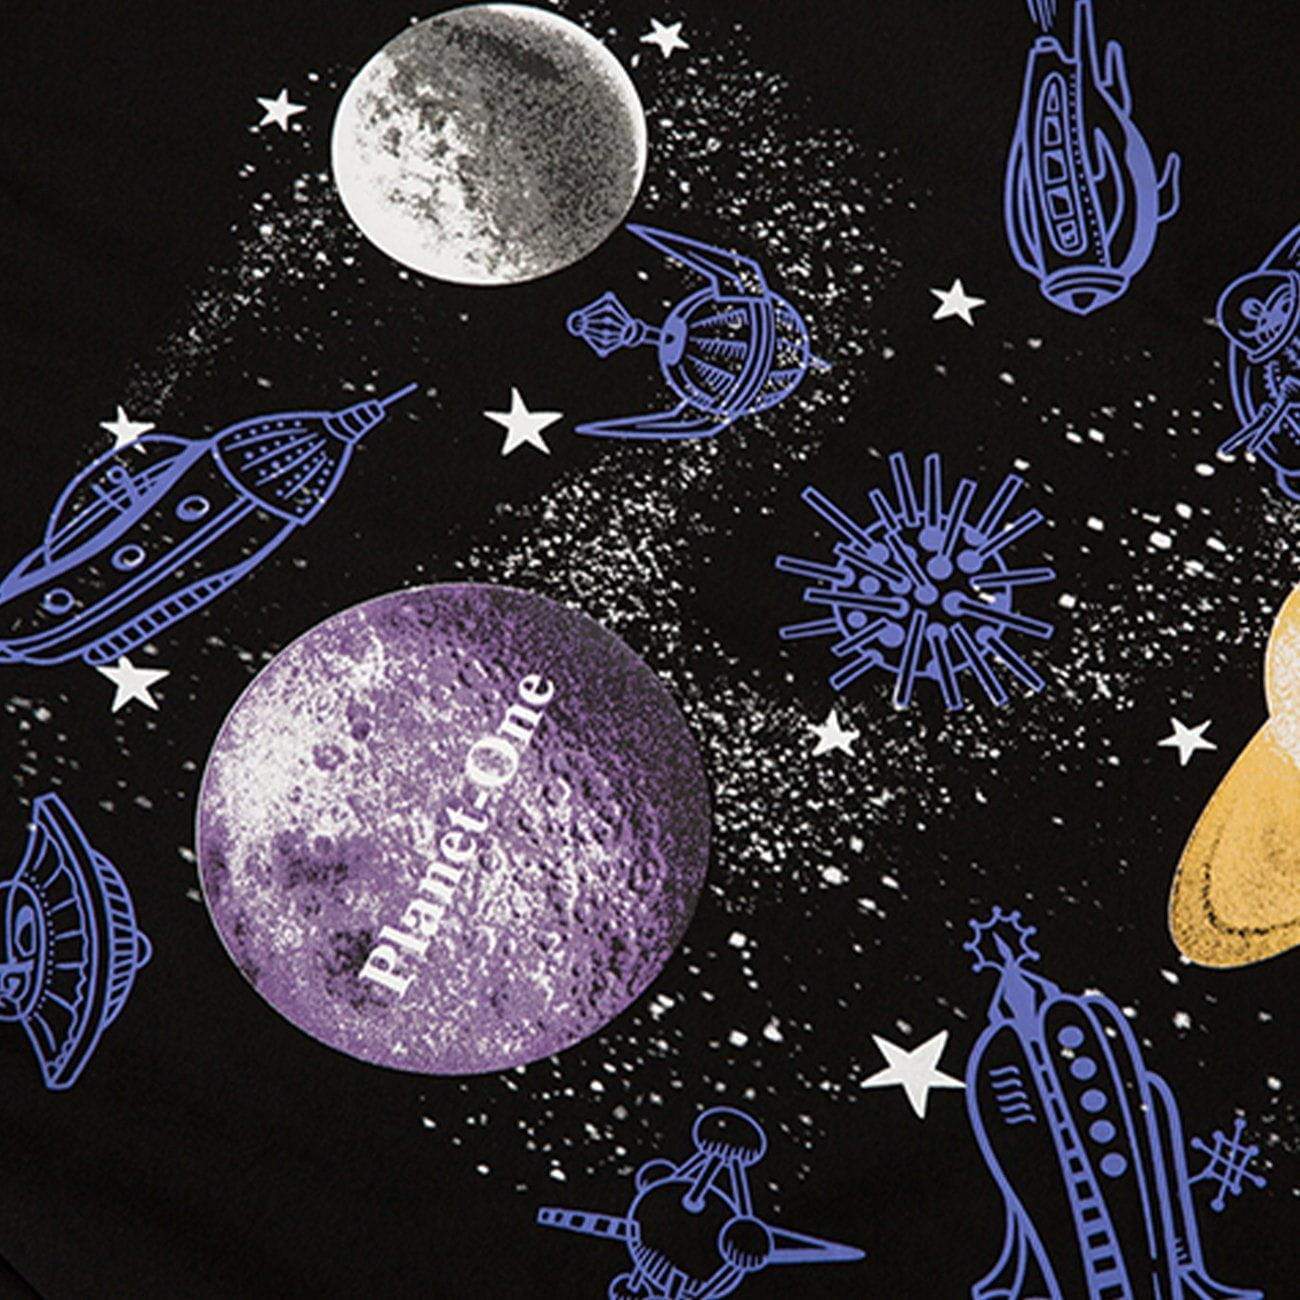 JUSTNOTAG Spaceship Planet Letter Print Sweatshirt